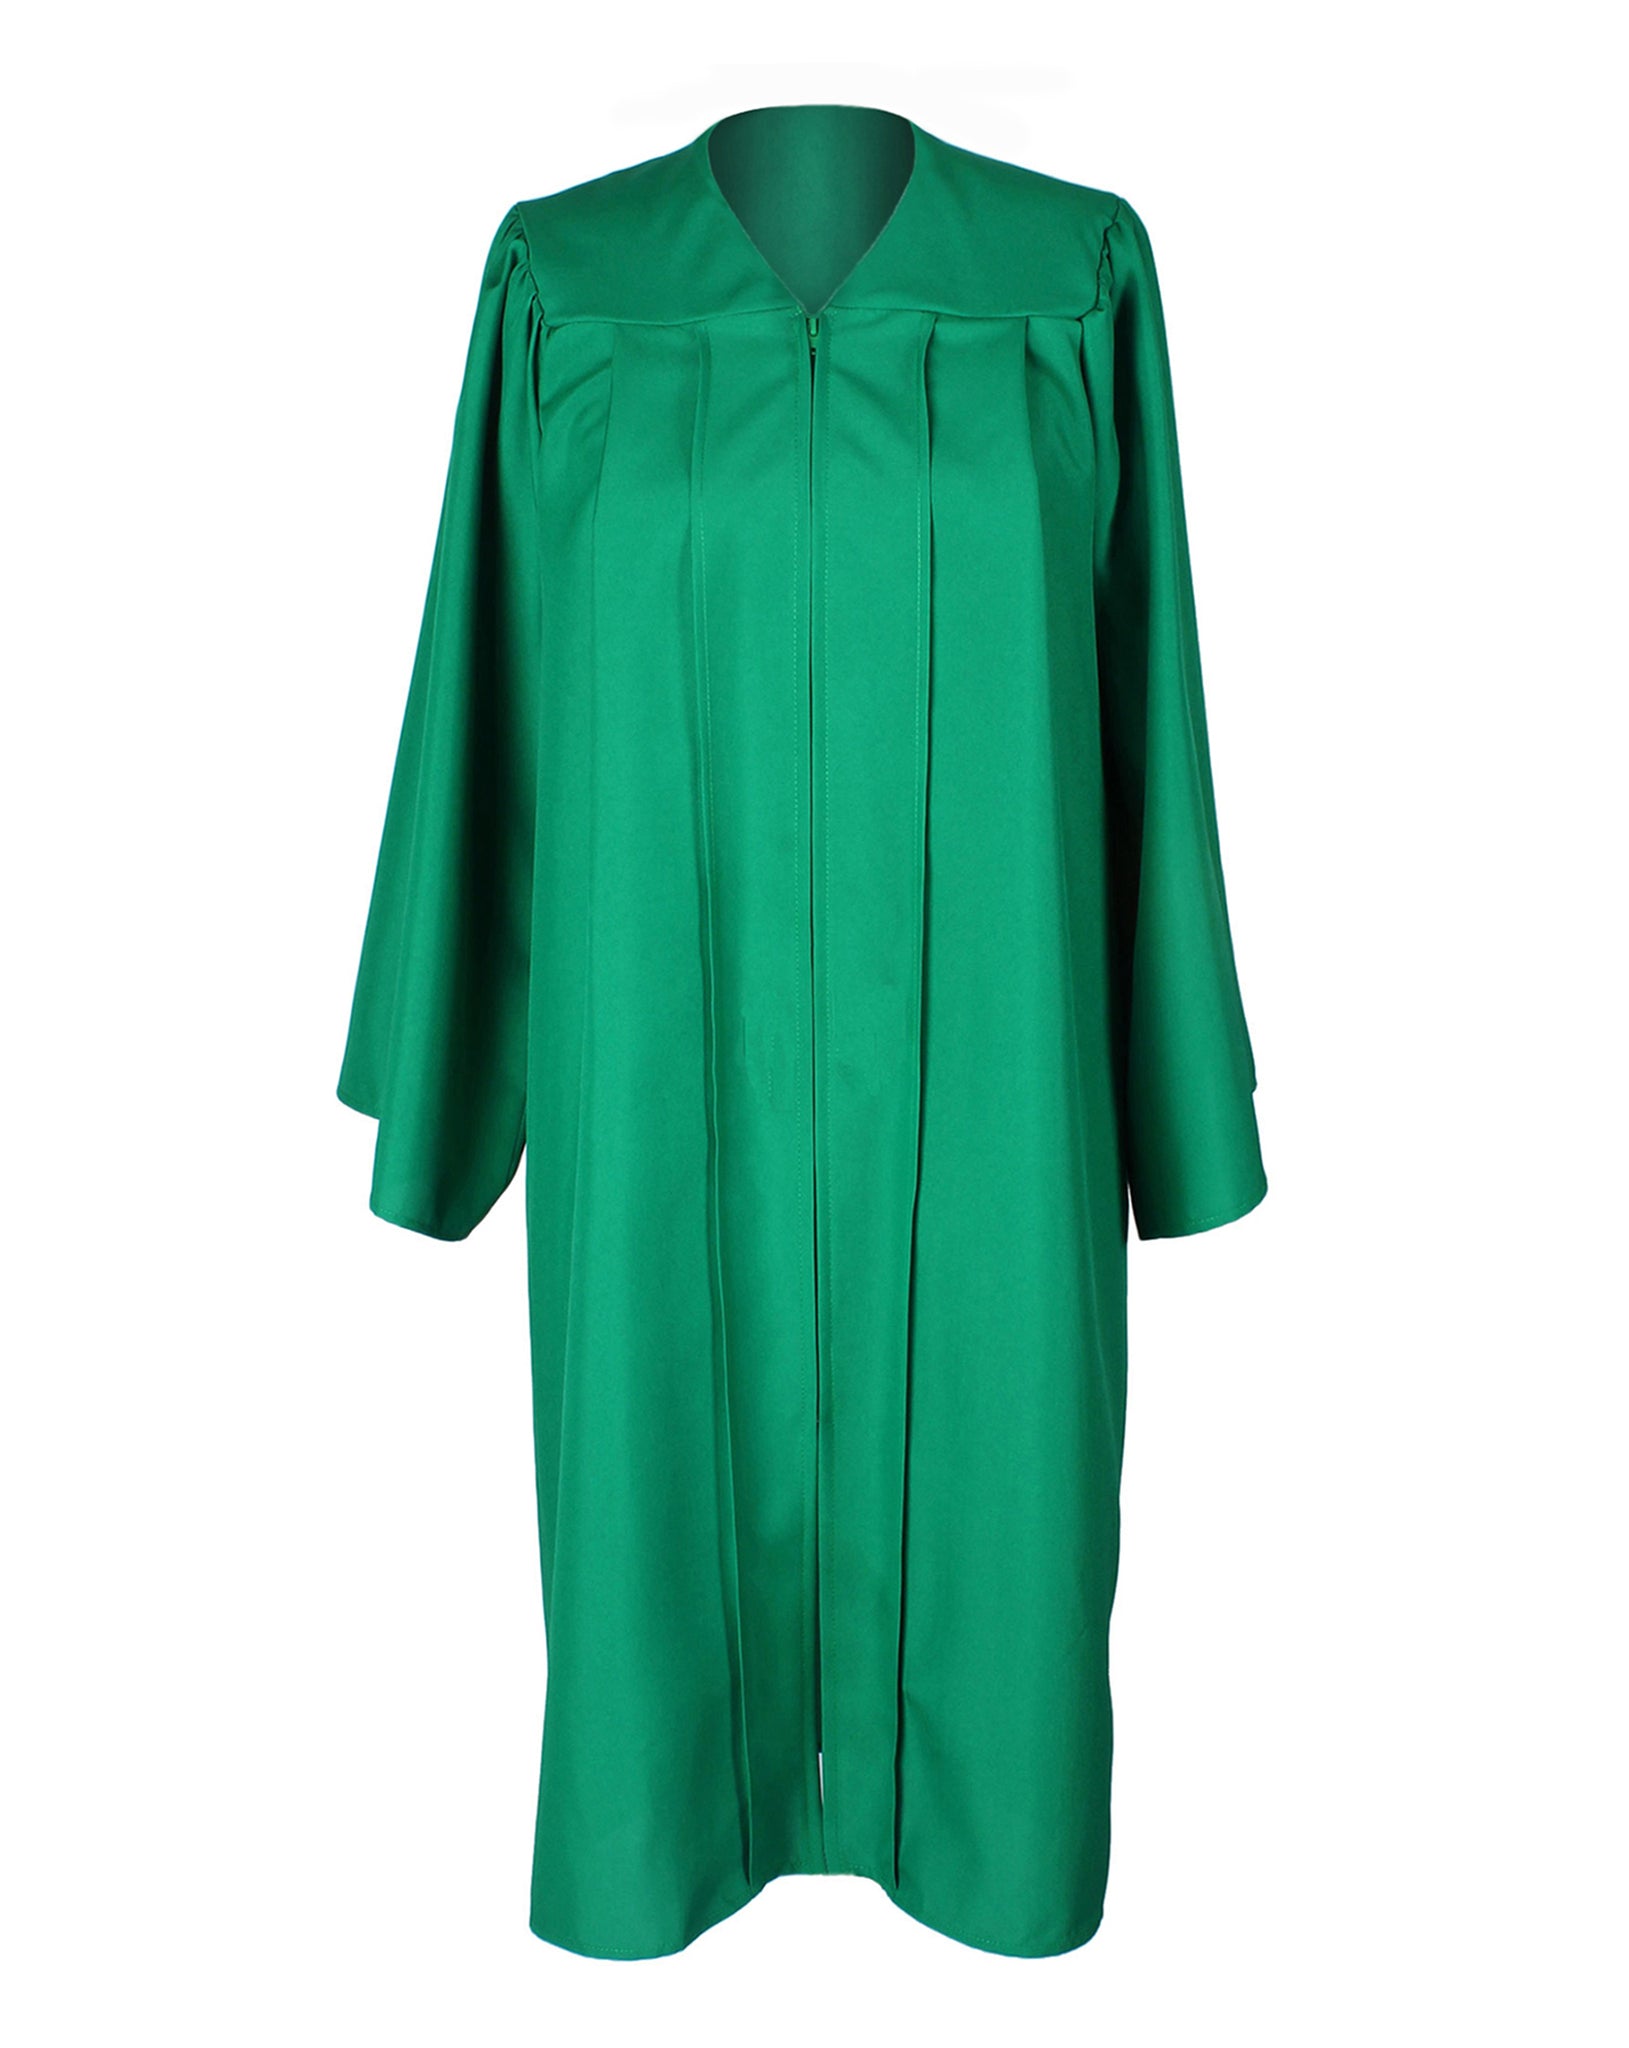 Unisex  Matte Graduation Gown|Choir Robe for Church|Cosplay Costume (Emerad Green)